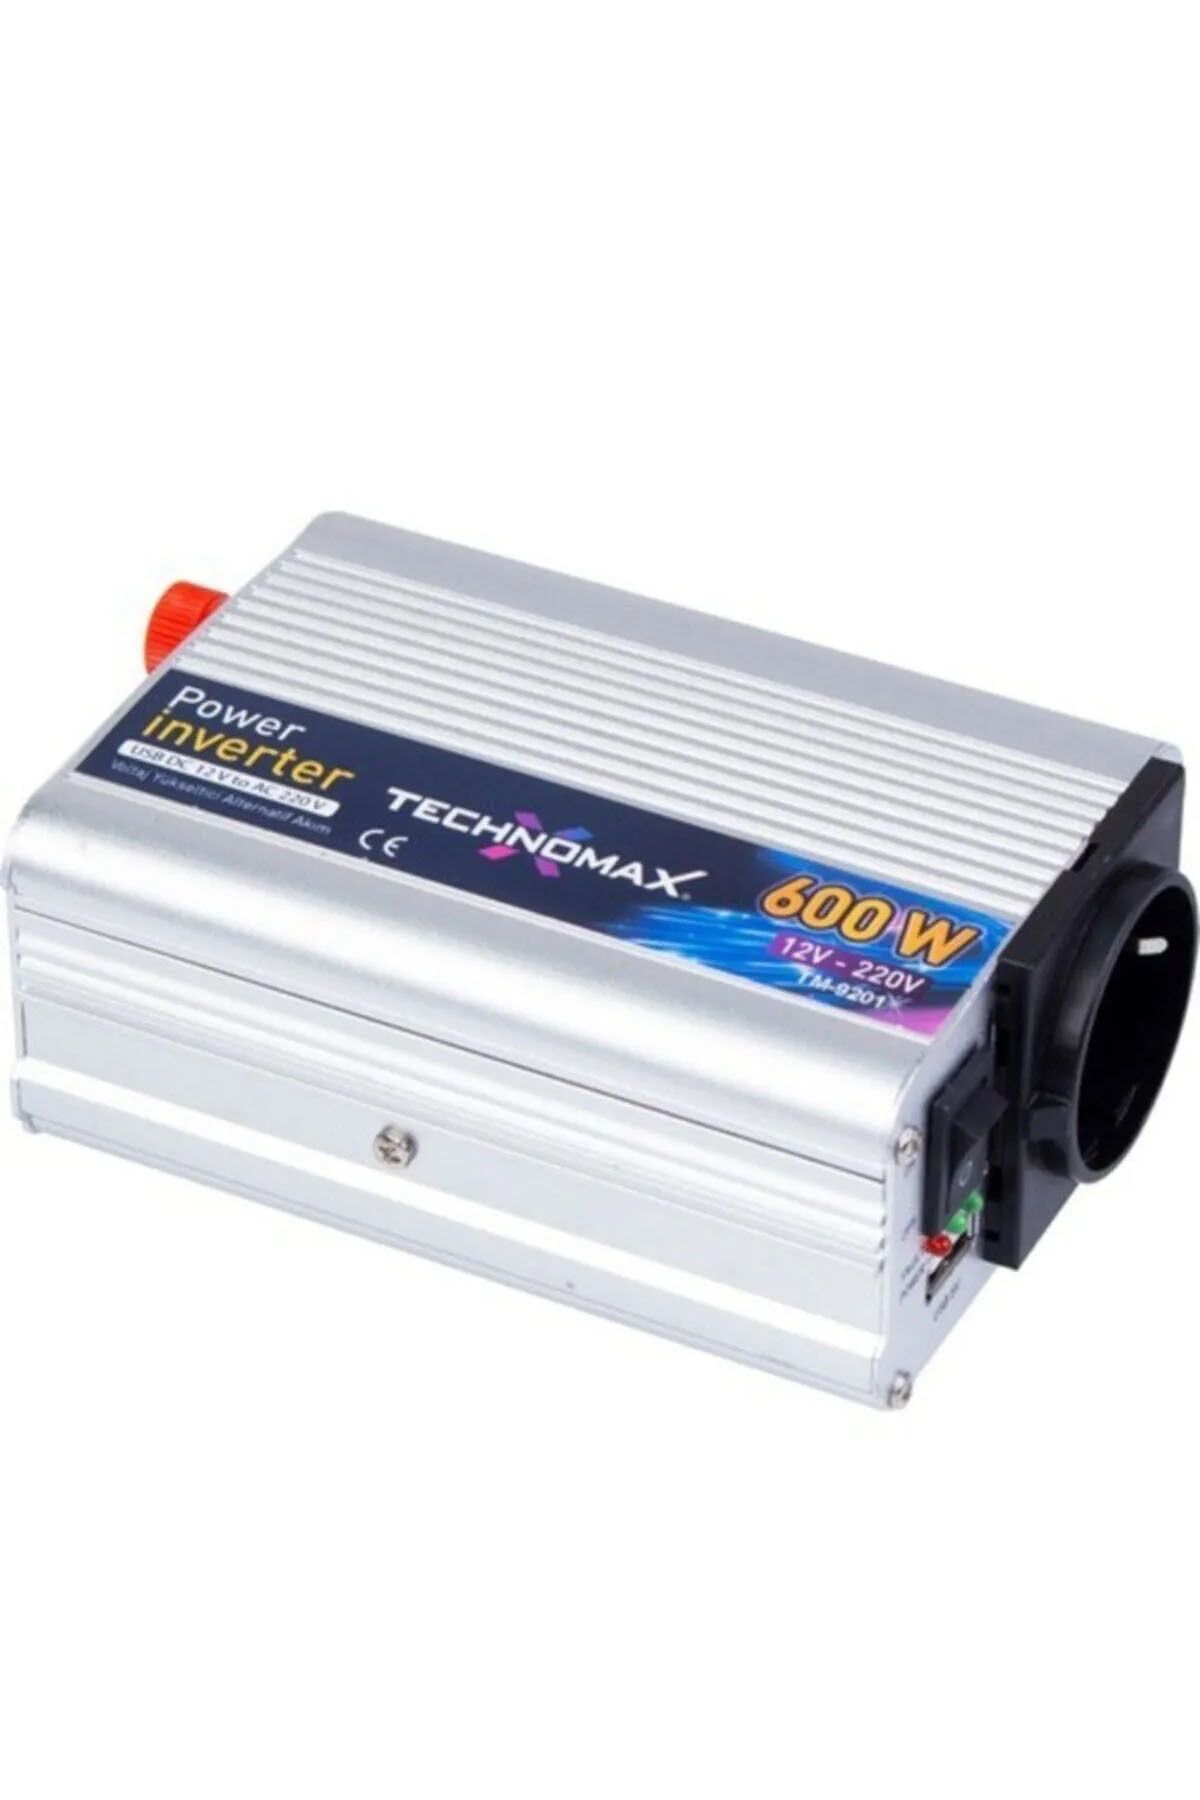 Mobee Technomax 600 W Inverter Dönüştürücü Usb Soketli Dc 12.v - 220.v Invertör